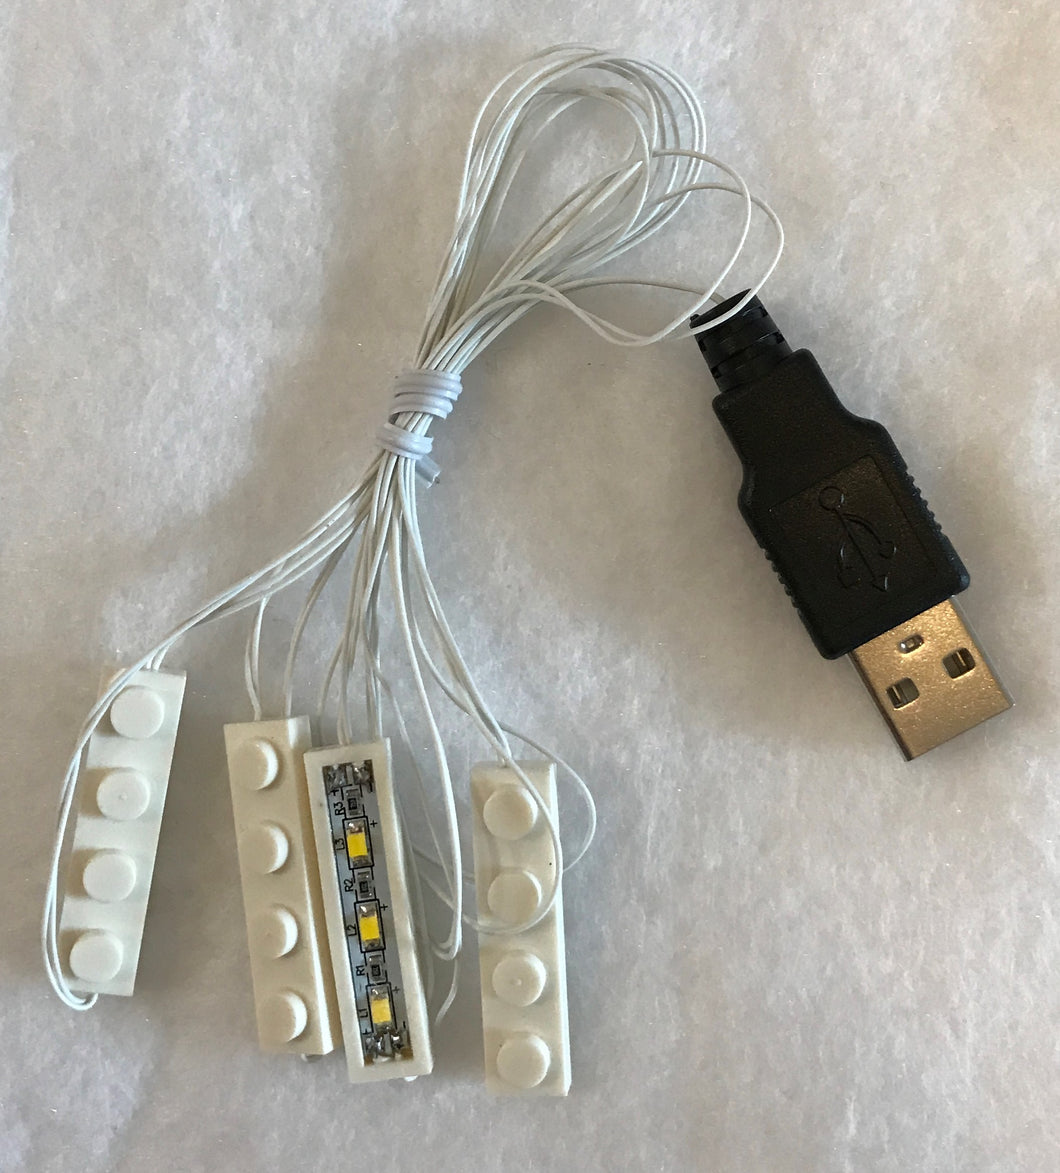 New 4 1x4 white led light brick for lego usb connected for lego custom